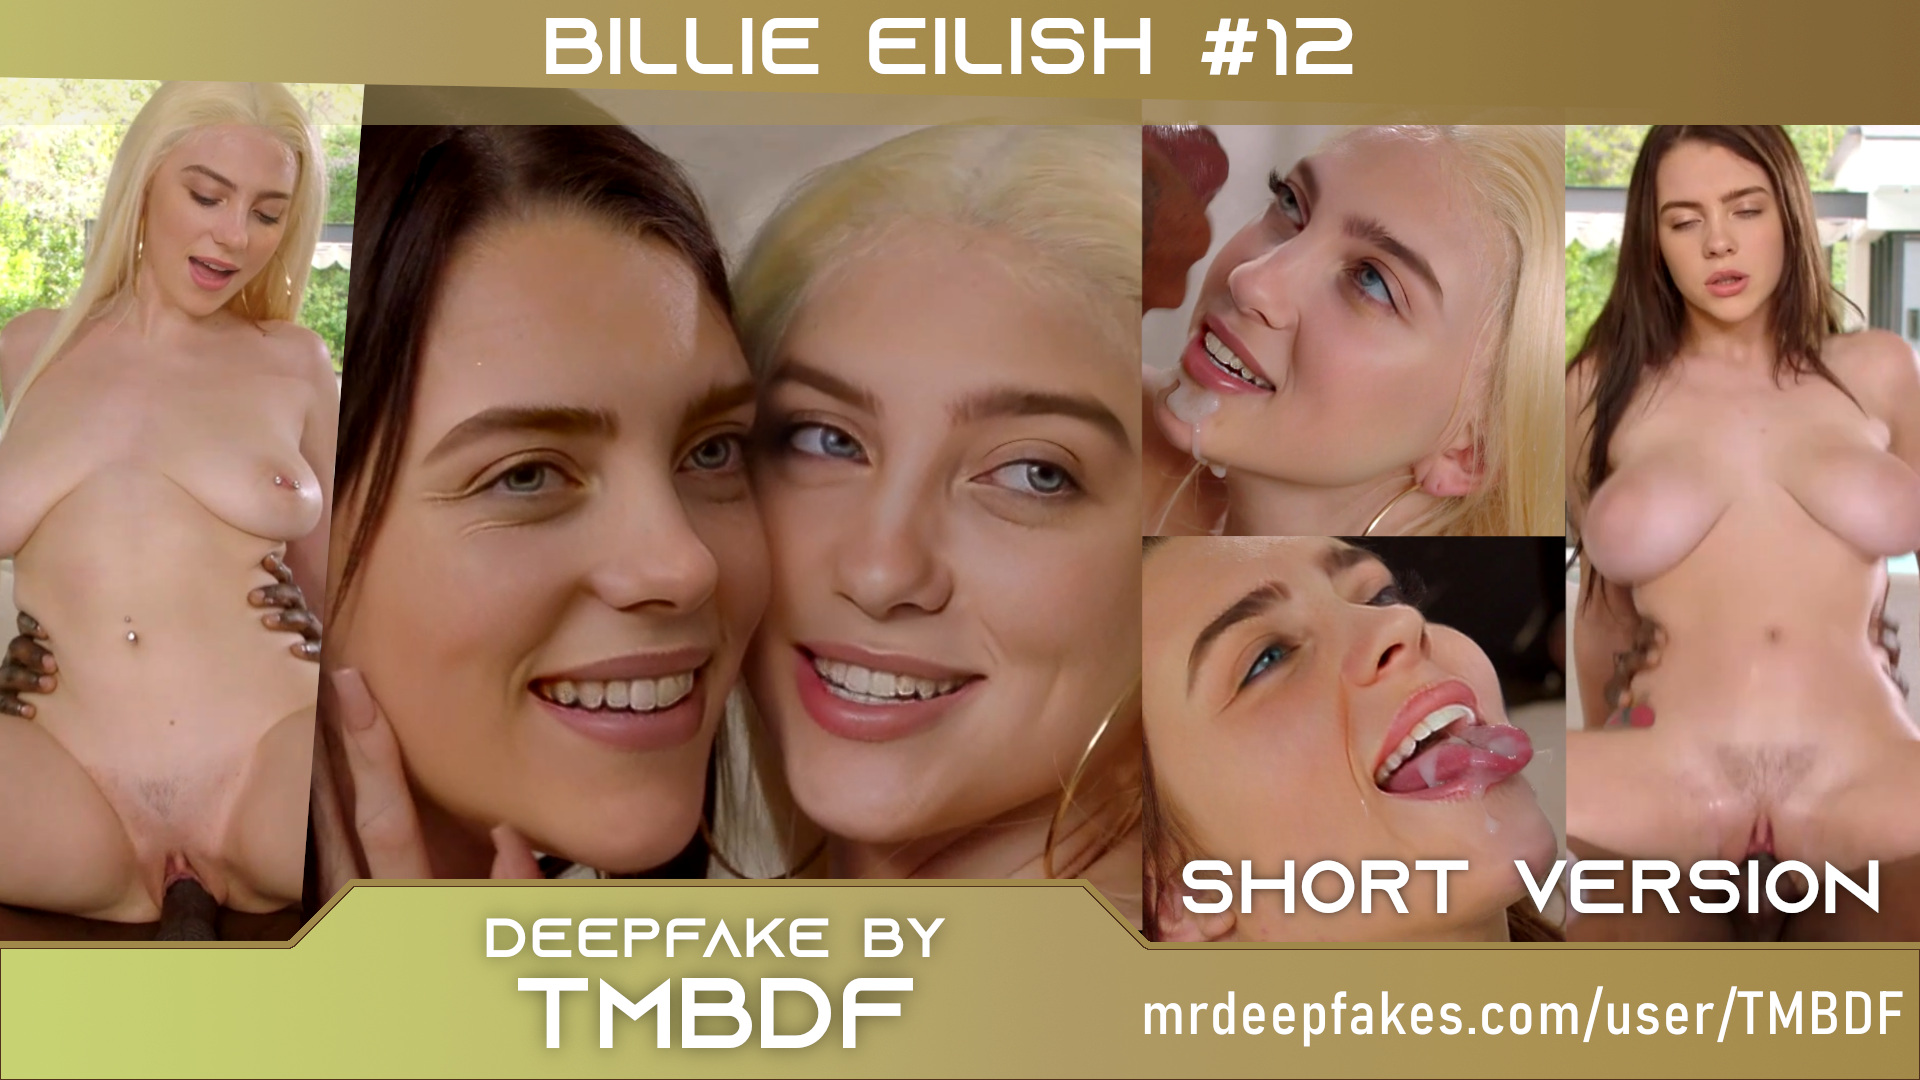 Porn 20 - Not Billie Eilish and her clone get fucked by two BBCs (short version - 20:30)  #12 DeepFake Porn - MrDeepFakes